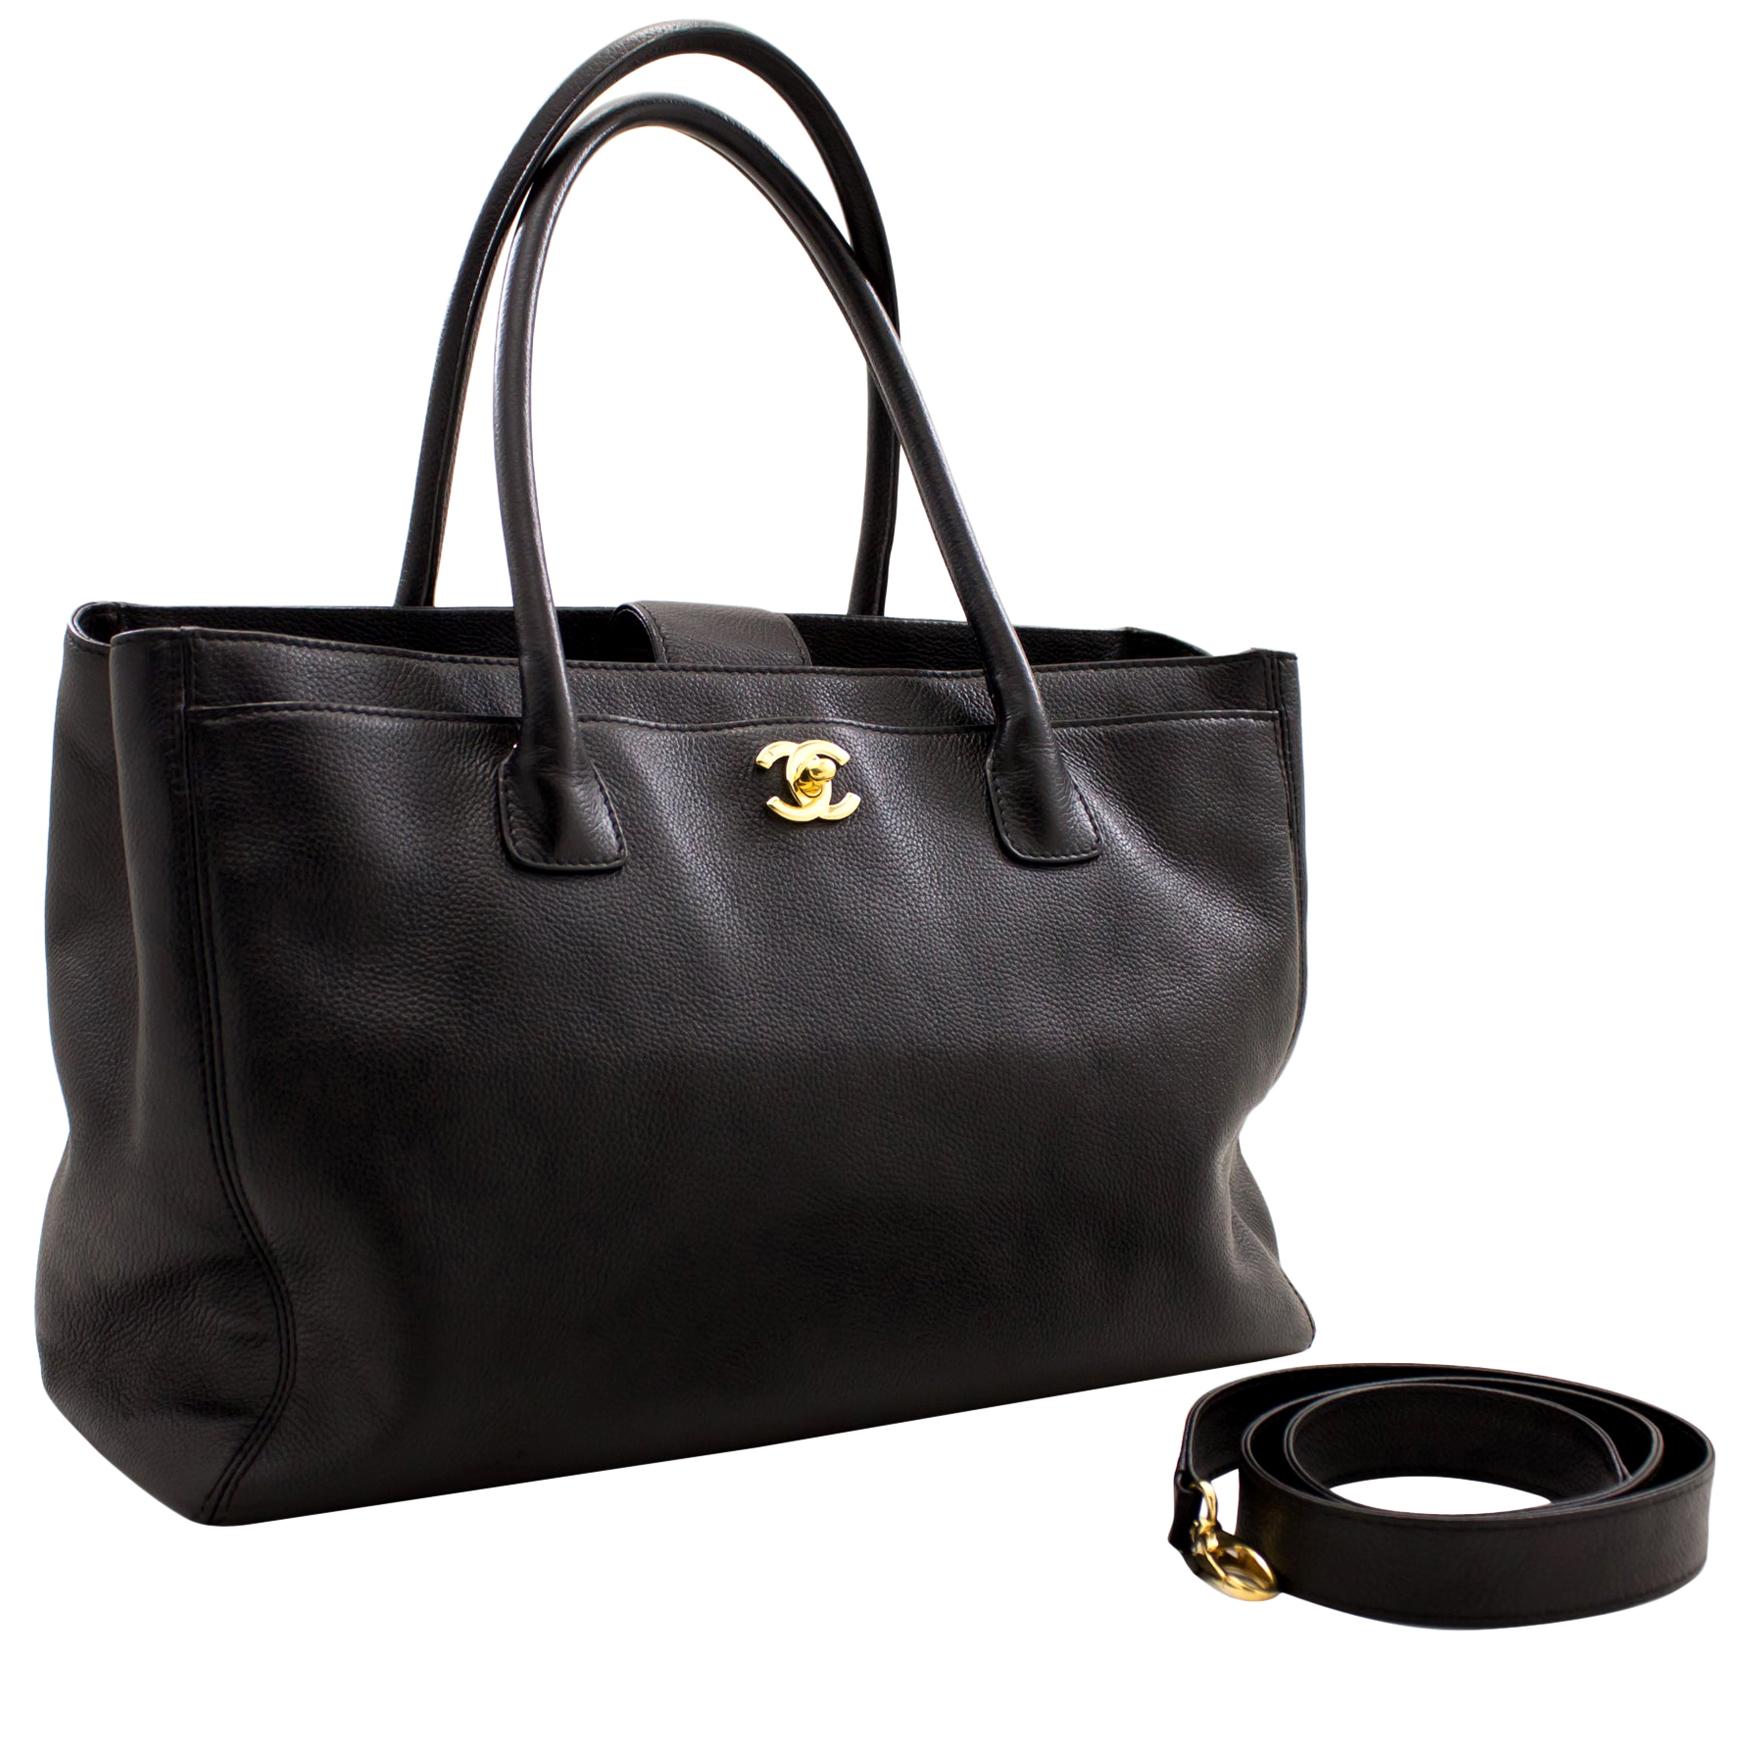 CHANEL Executive Tote Caviar Shoulder Bag Handbag Black Gold Strap